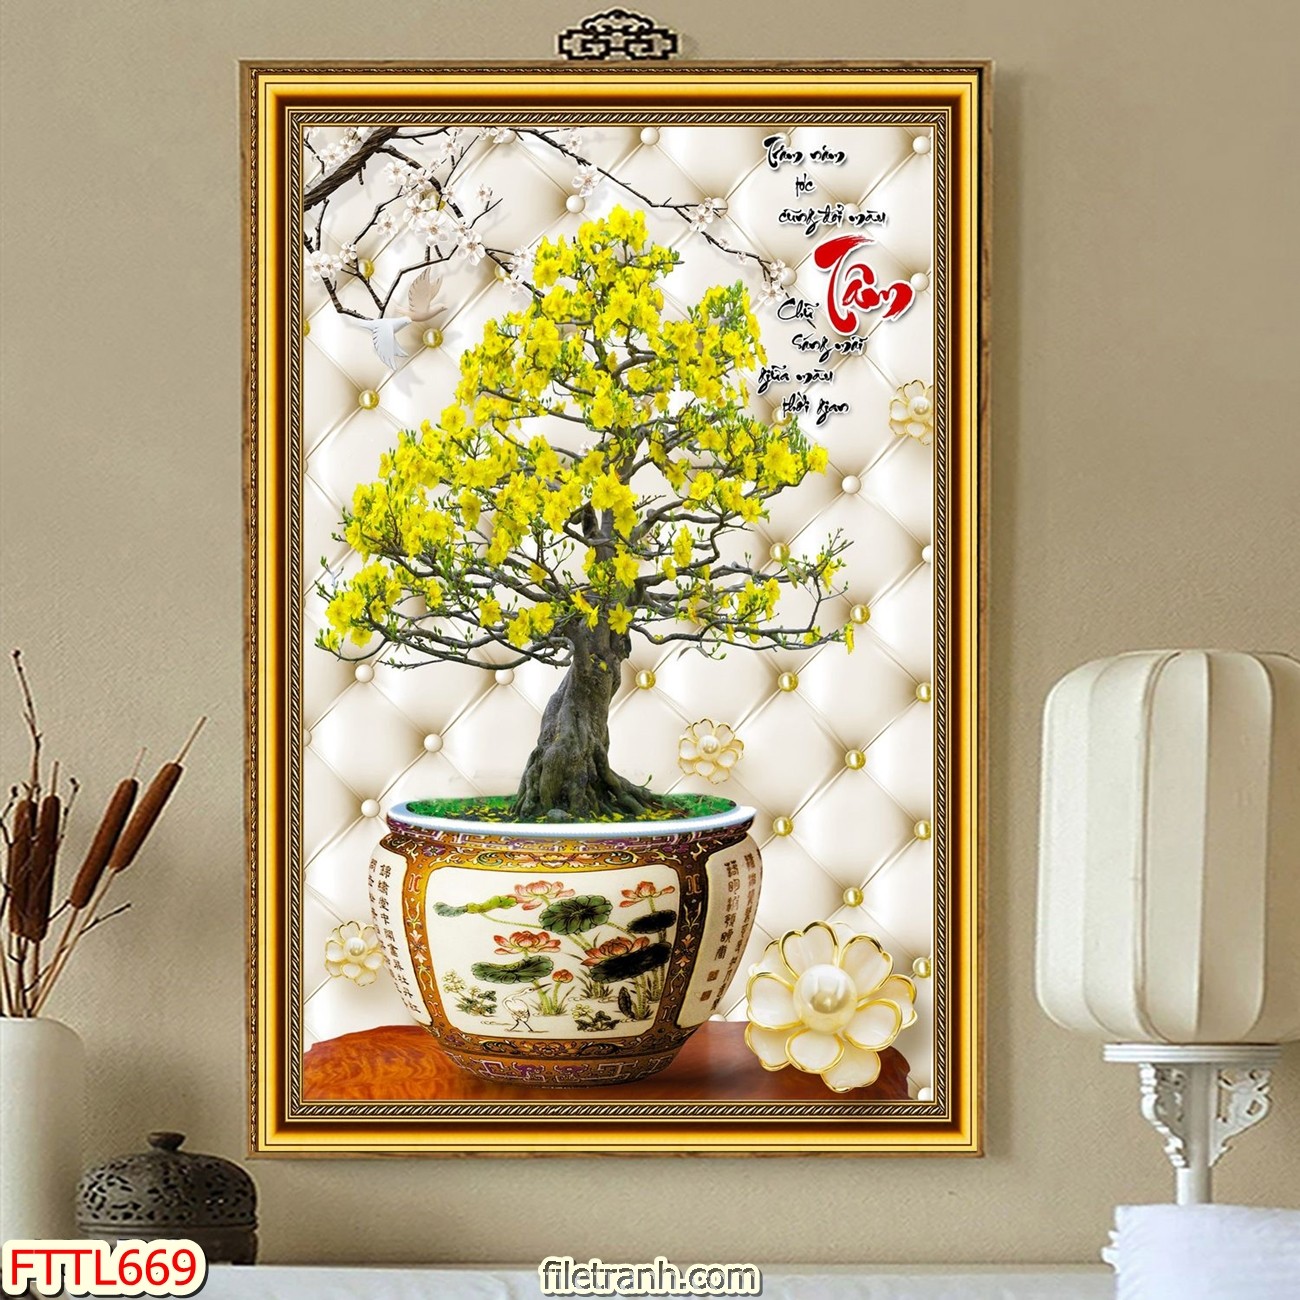 https://filetranh.com/file-tranh-chau-mai-bonsai/file-tranh-chau-mai-bonsai-fttl669.html